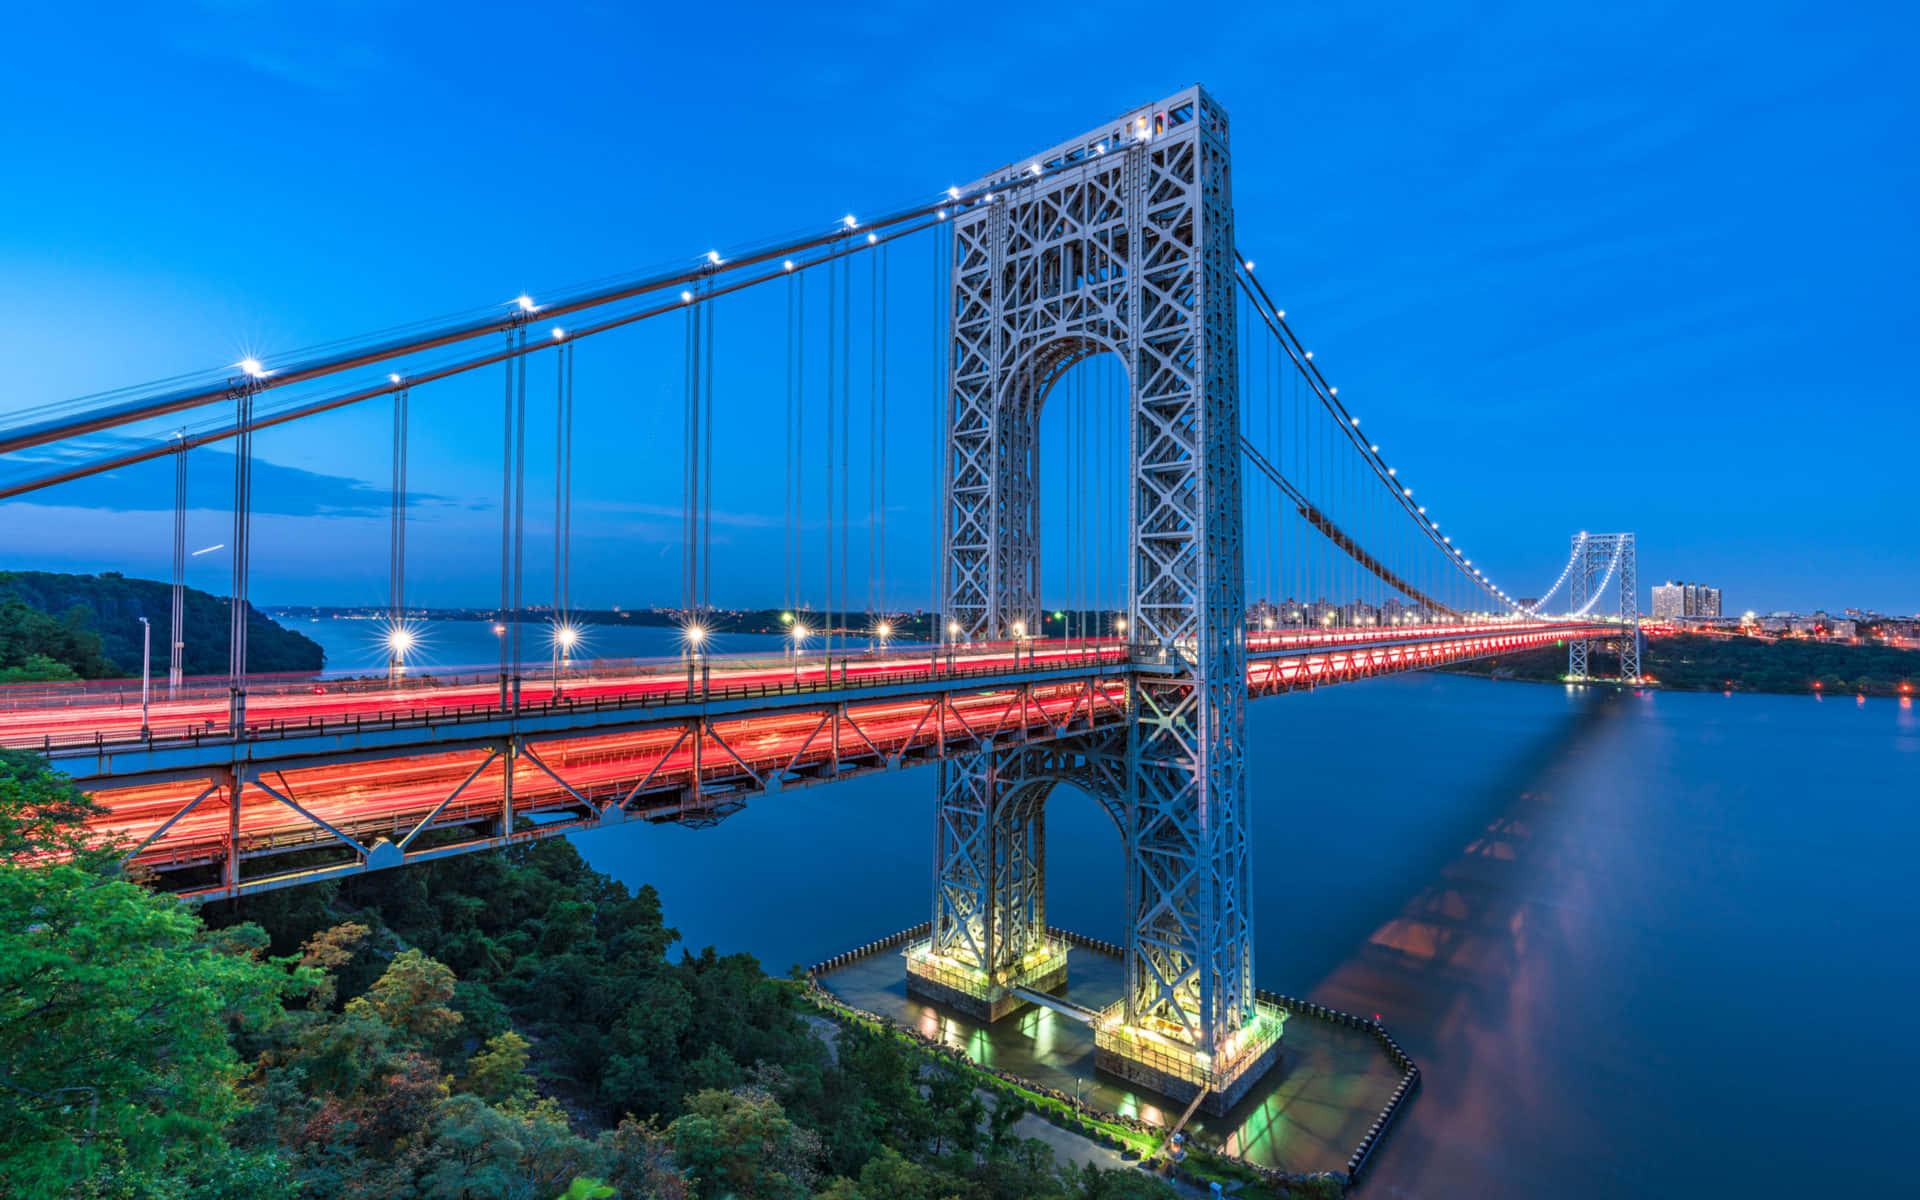 New York City 4k Ultra Hd Bridge Over River Wallpaper